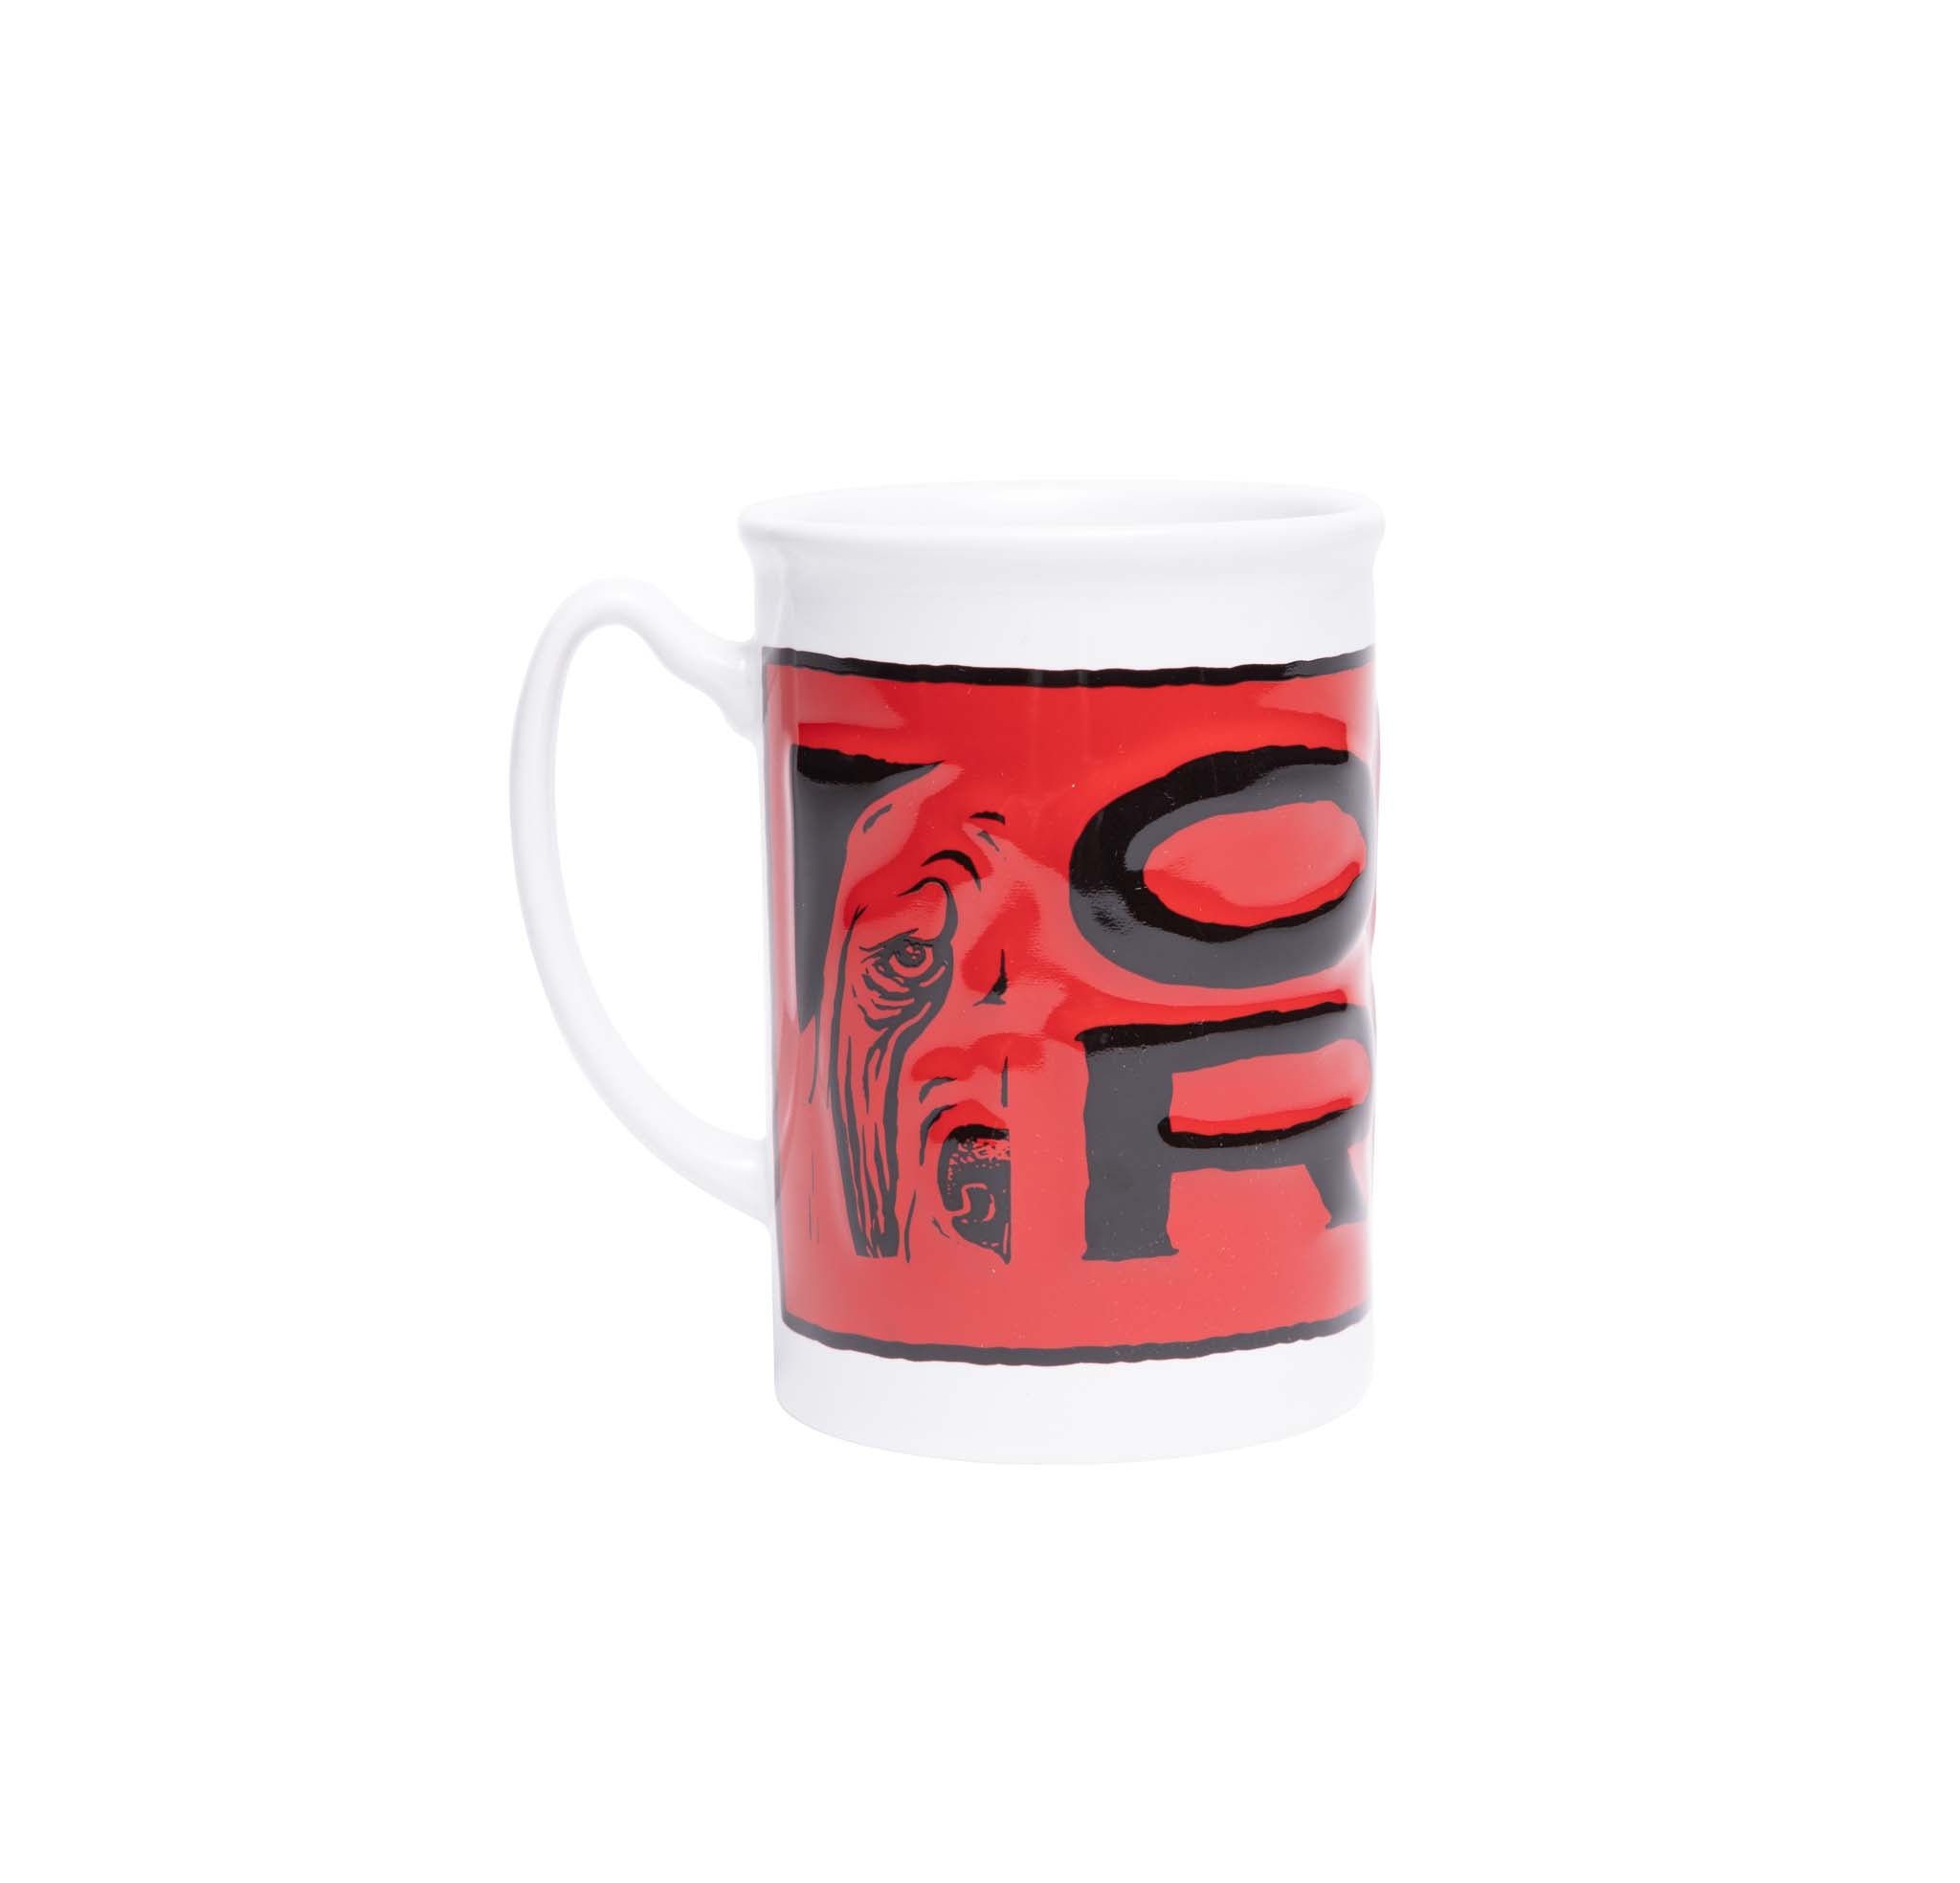 Ole Red Sculpted Mug